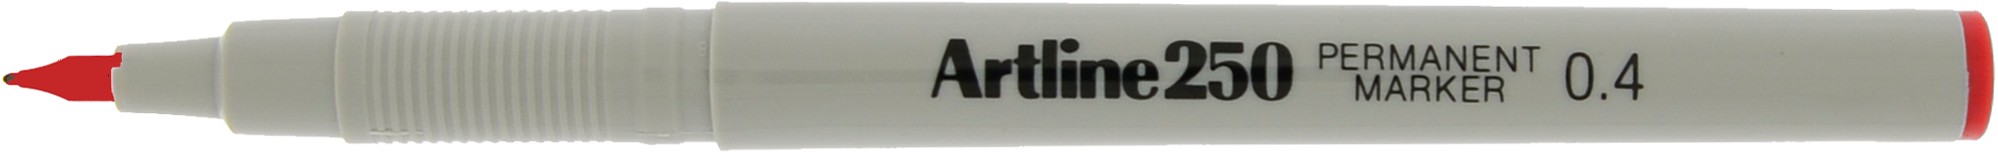 Permanent marker ARTLINE 250, corp plastic, varf rotund 0.4mm - rosu